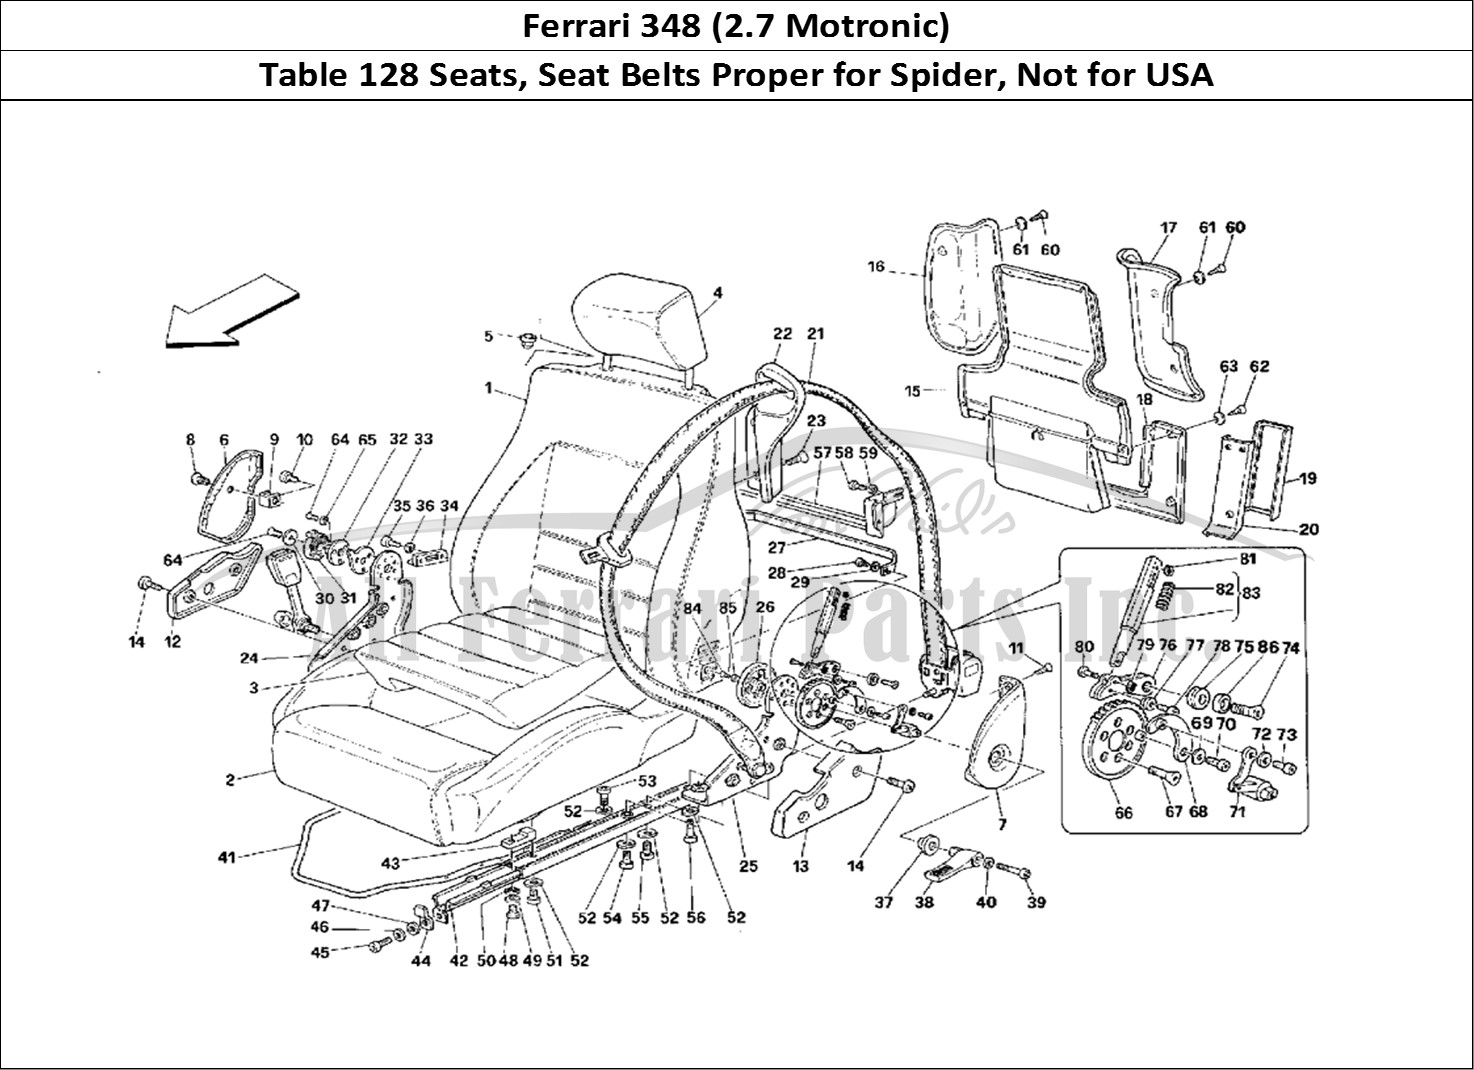 Ferrari Parts Ferrari 348 (2.7 Motronic) Page 128 Seats and Safety Belts -V